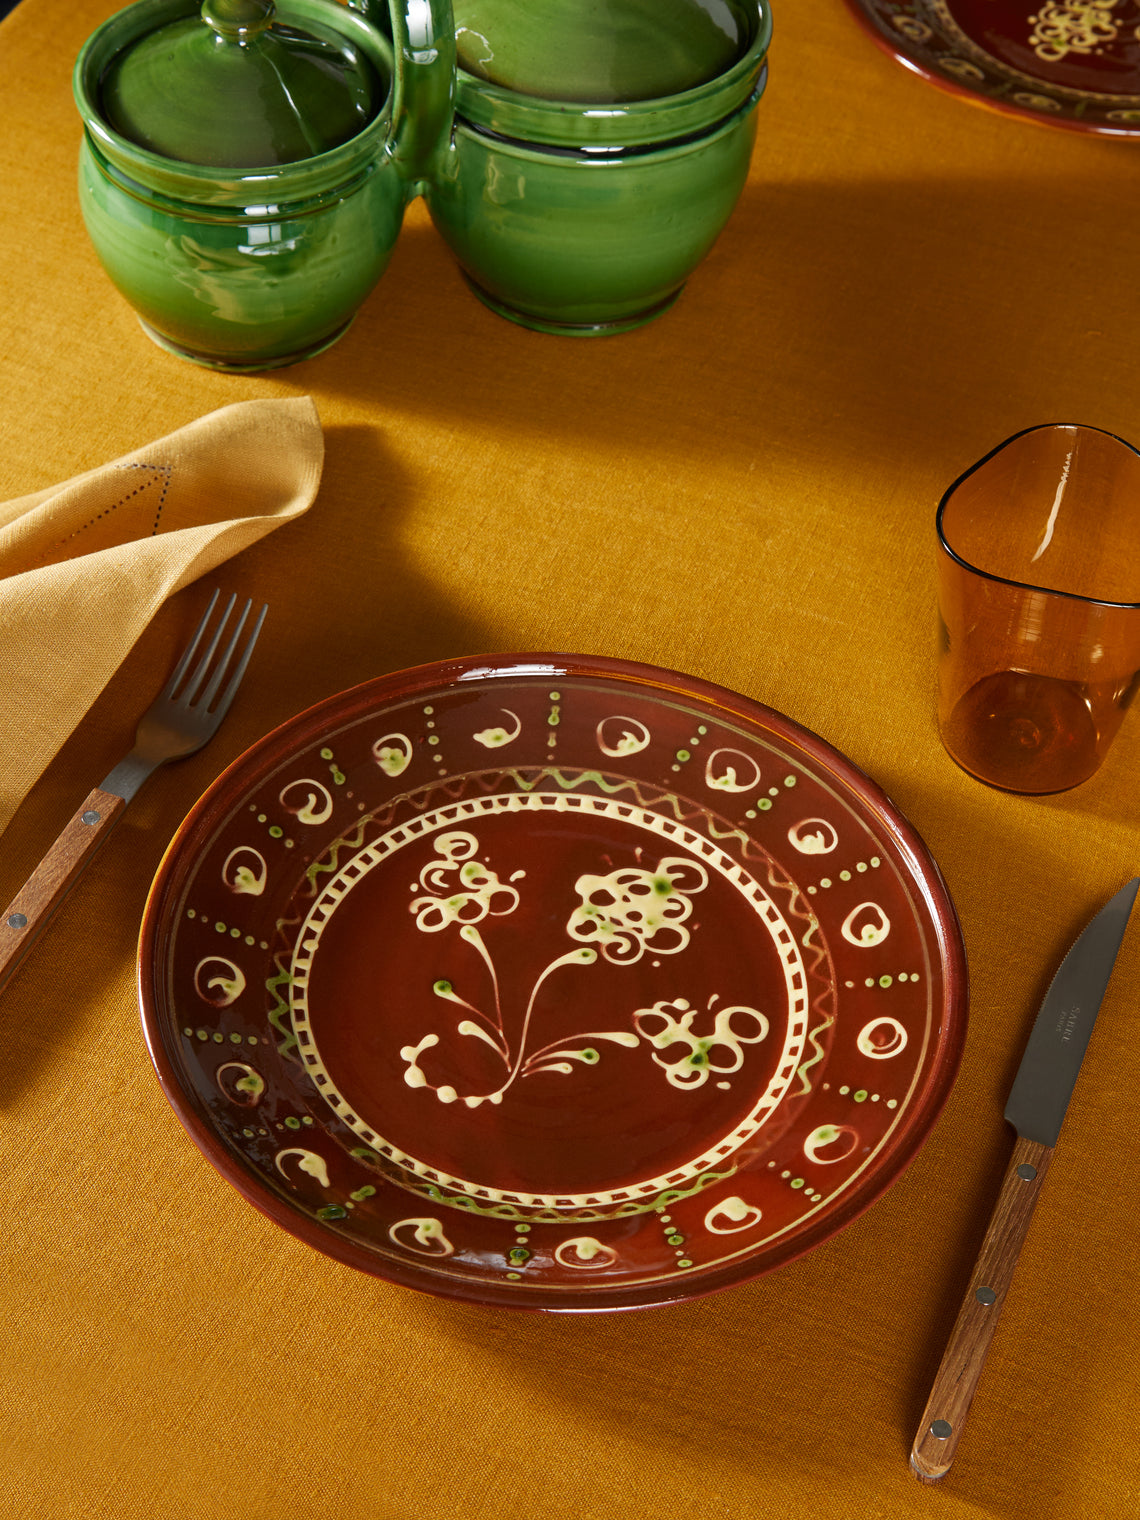 Poterie de Cliousclat - Hand-Painted Slipware Dinner Plates (Set of 4) -  - ABASK